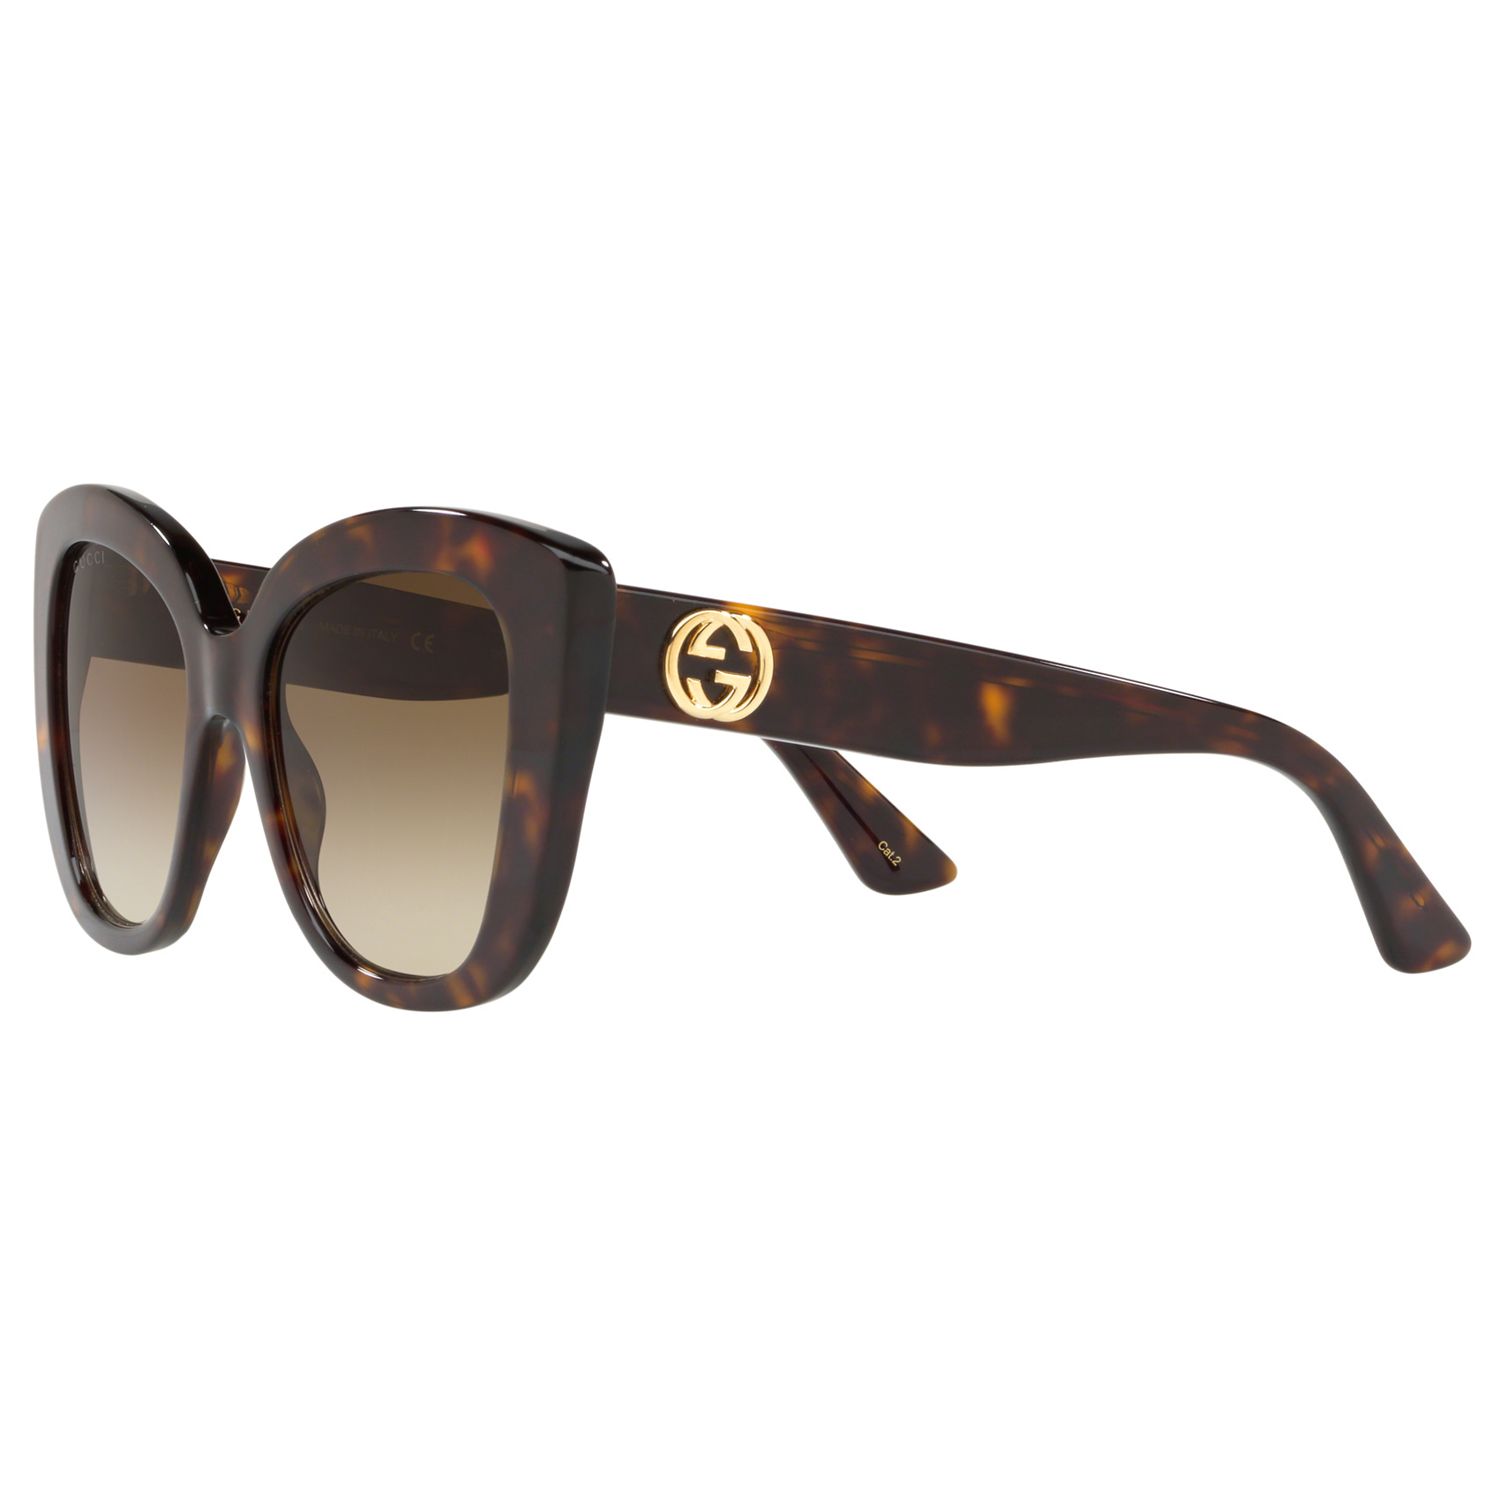 Buy Gucci GG0327S Women's Cat's Eye Sunglasses Online at johnlewis.com